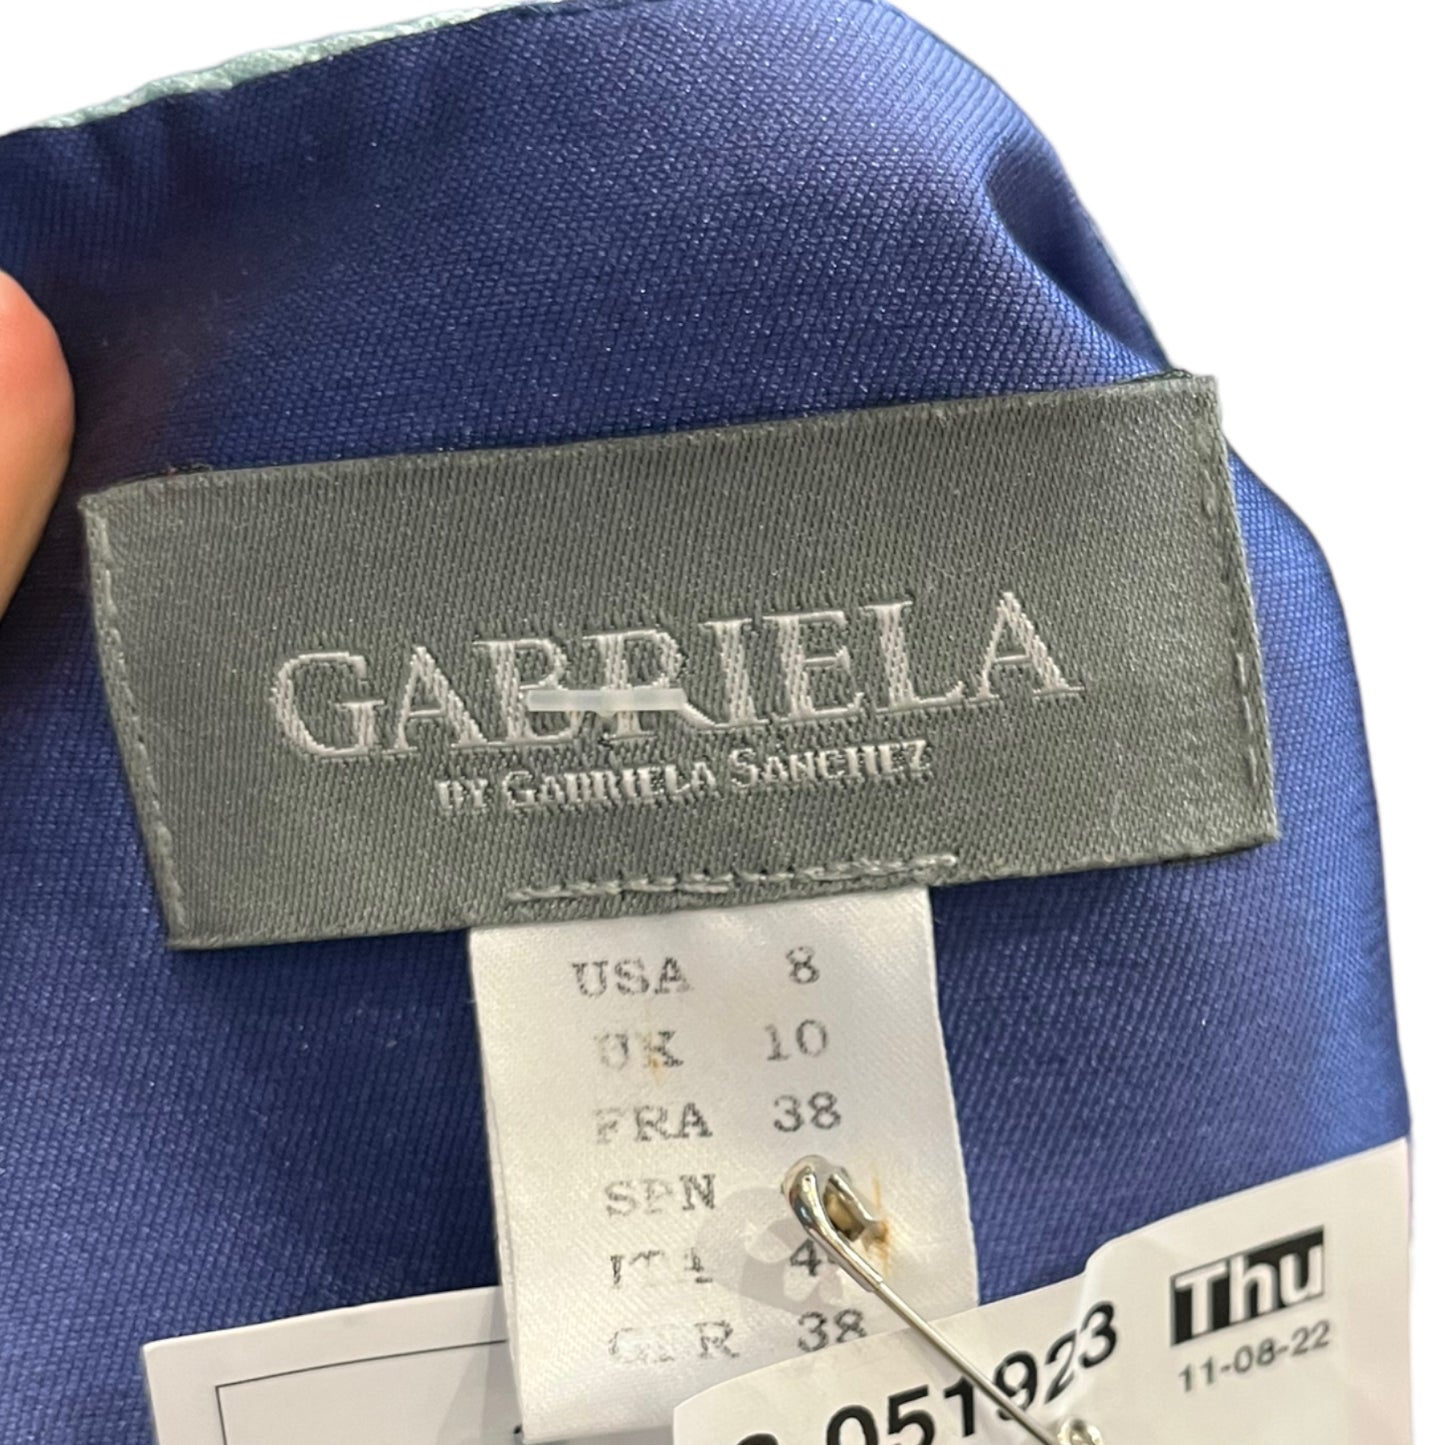 Gabriela by Gabriela Sanchez Turquoise and Blue A Line Dress and Jacket